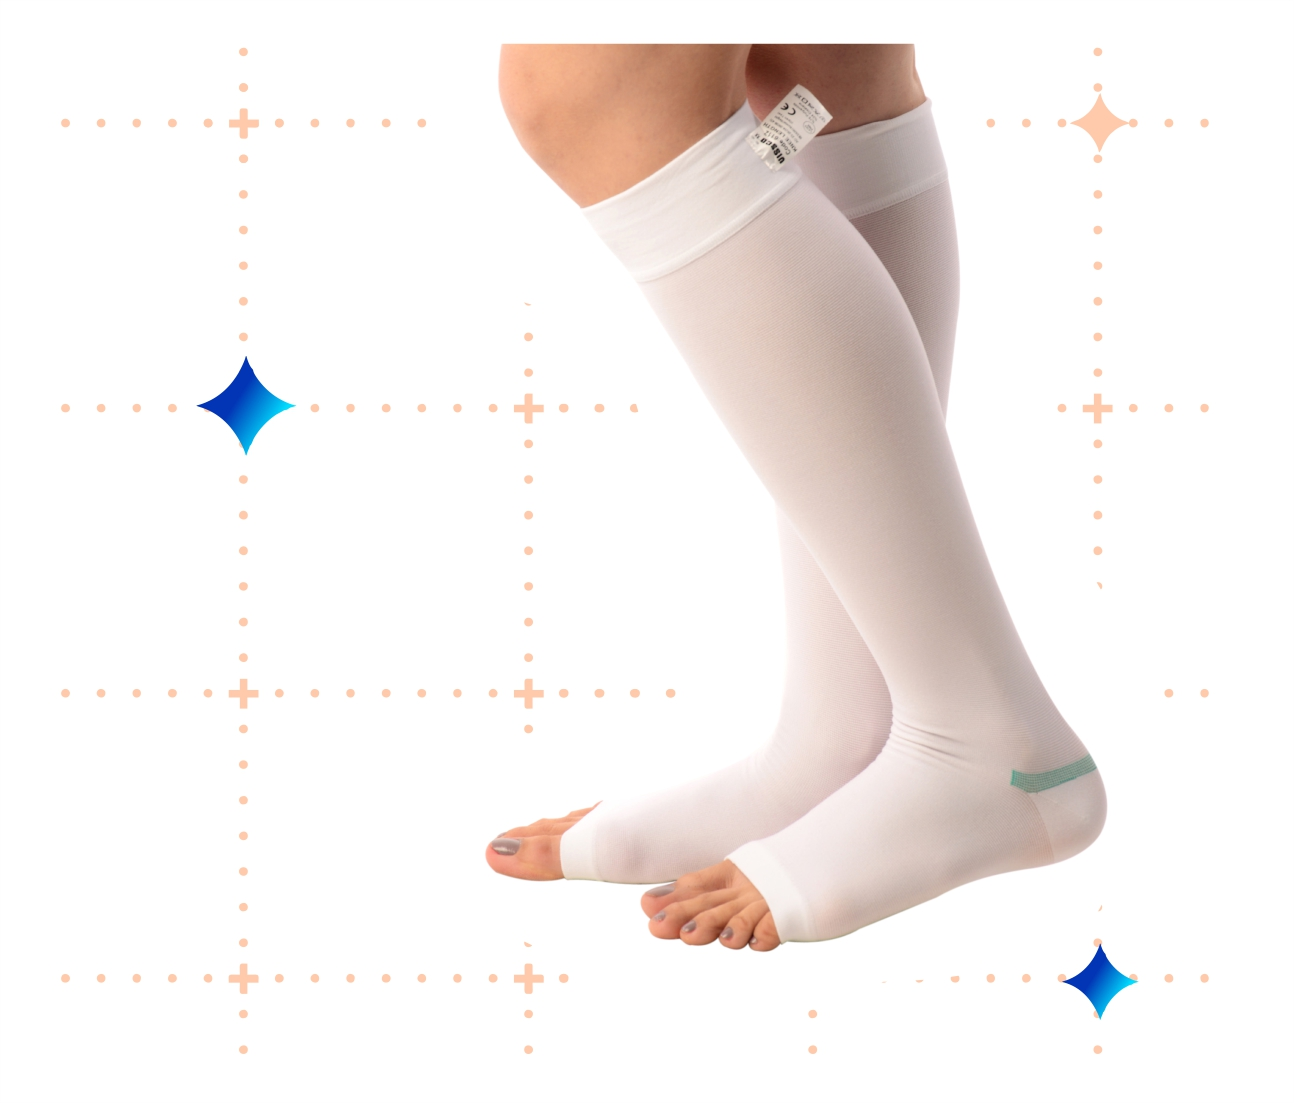 Elastic Stockings for Varicose Veins - Huibo Medical